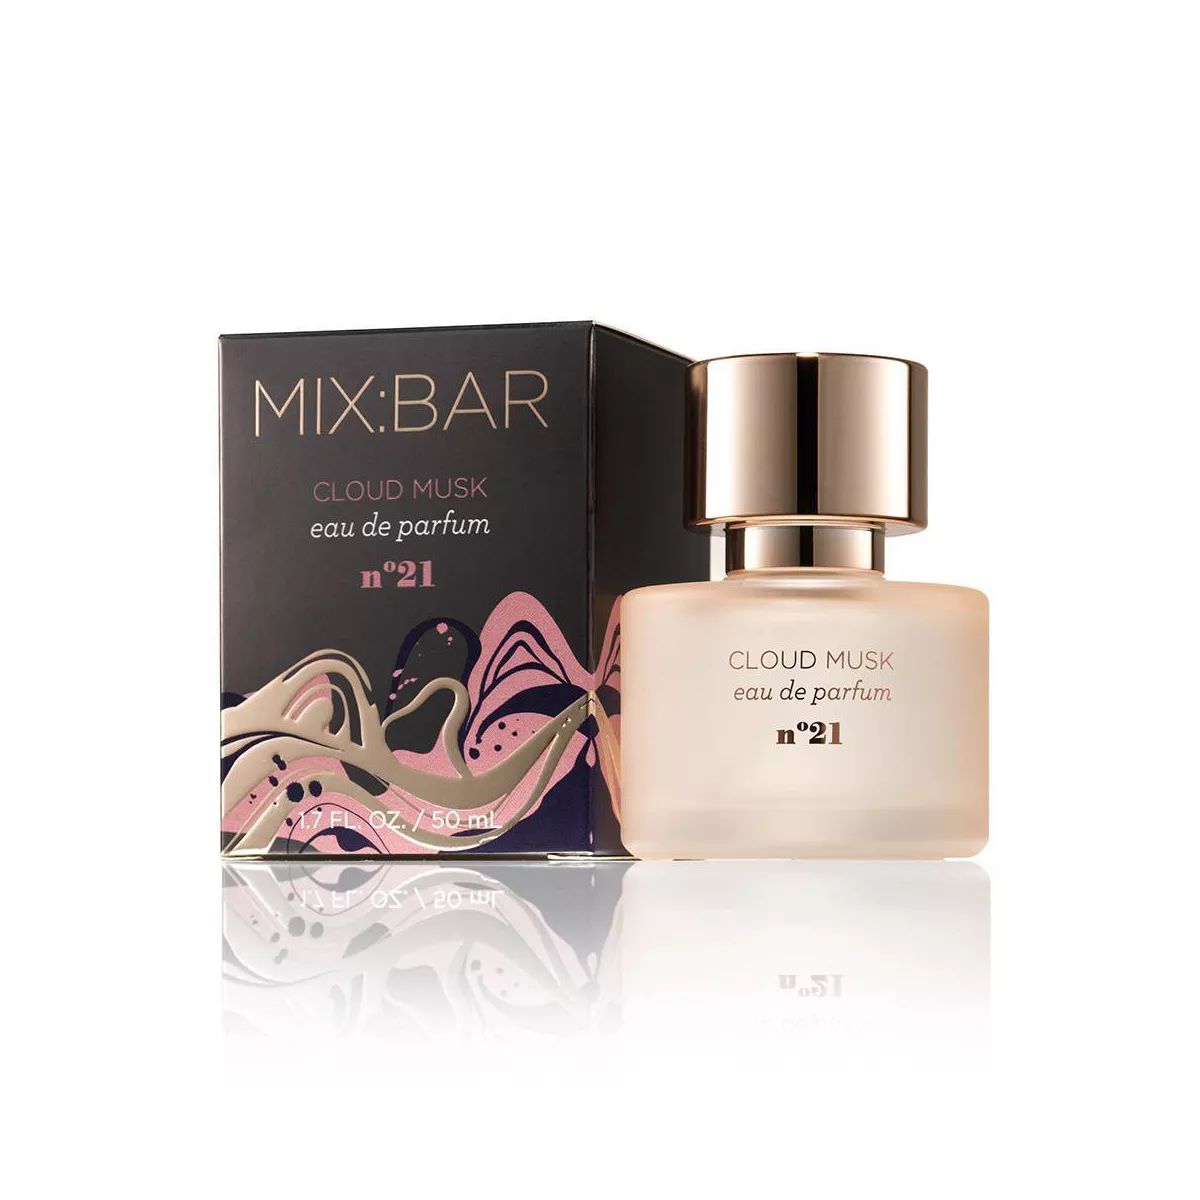 MIX:BAR Cloud Musk Eau de Parfum - 1.7 fl oz | Target